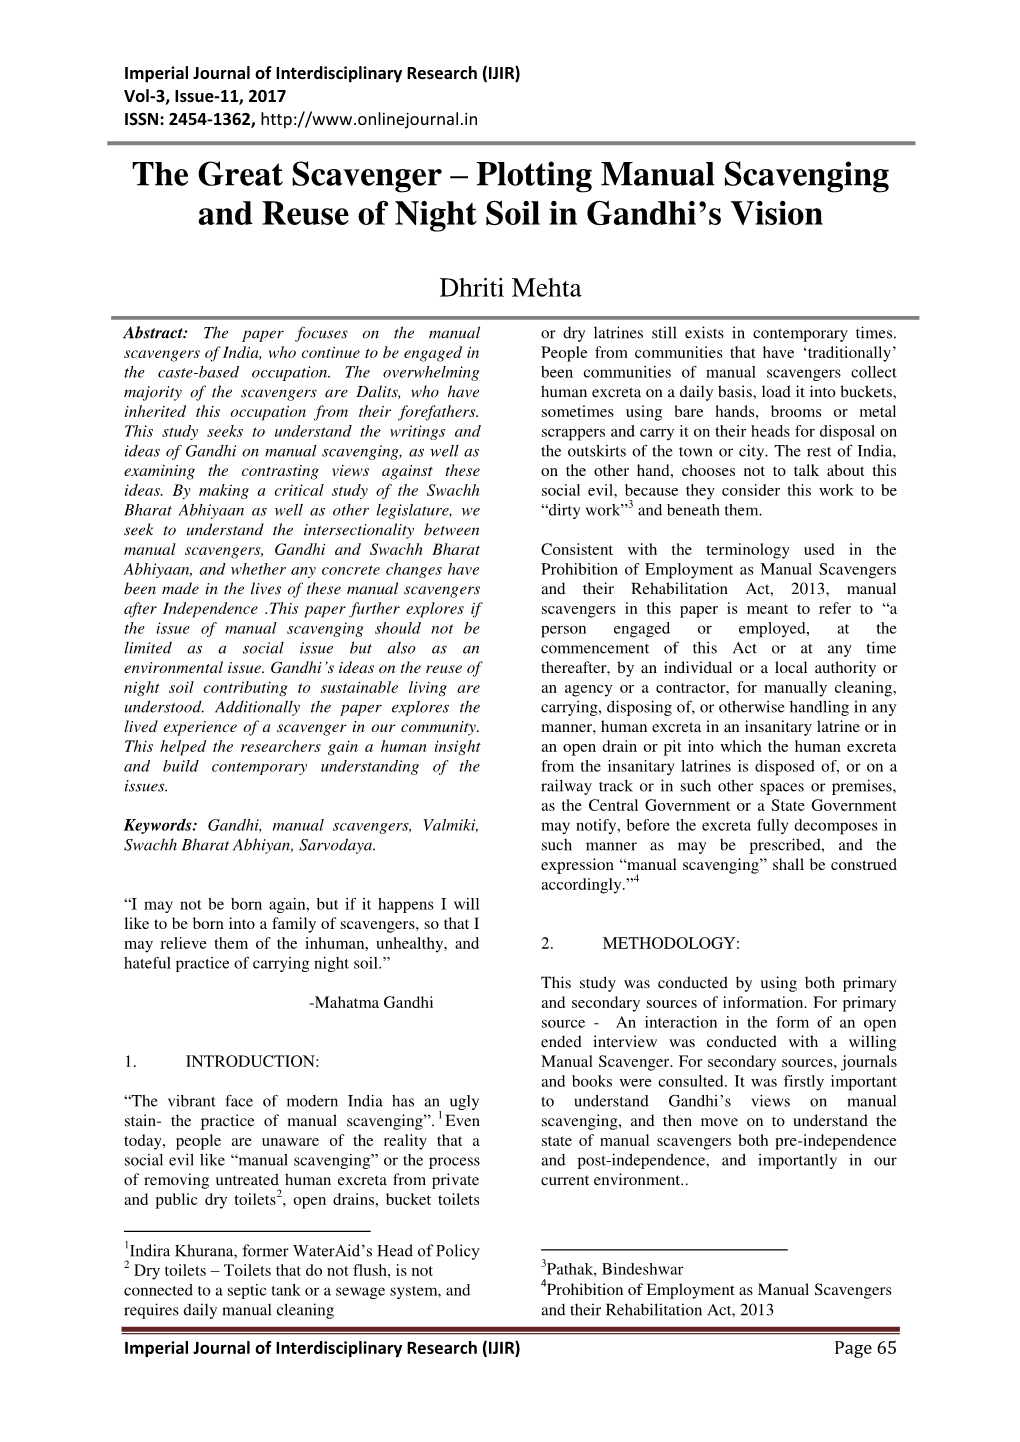 Plotting Manual Scavenging and Reuse of Night Soil in Gandhi’S Vision